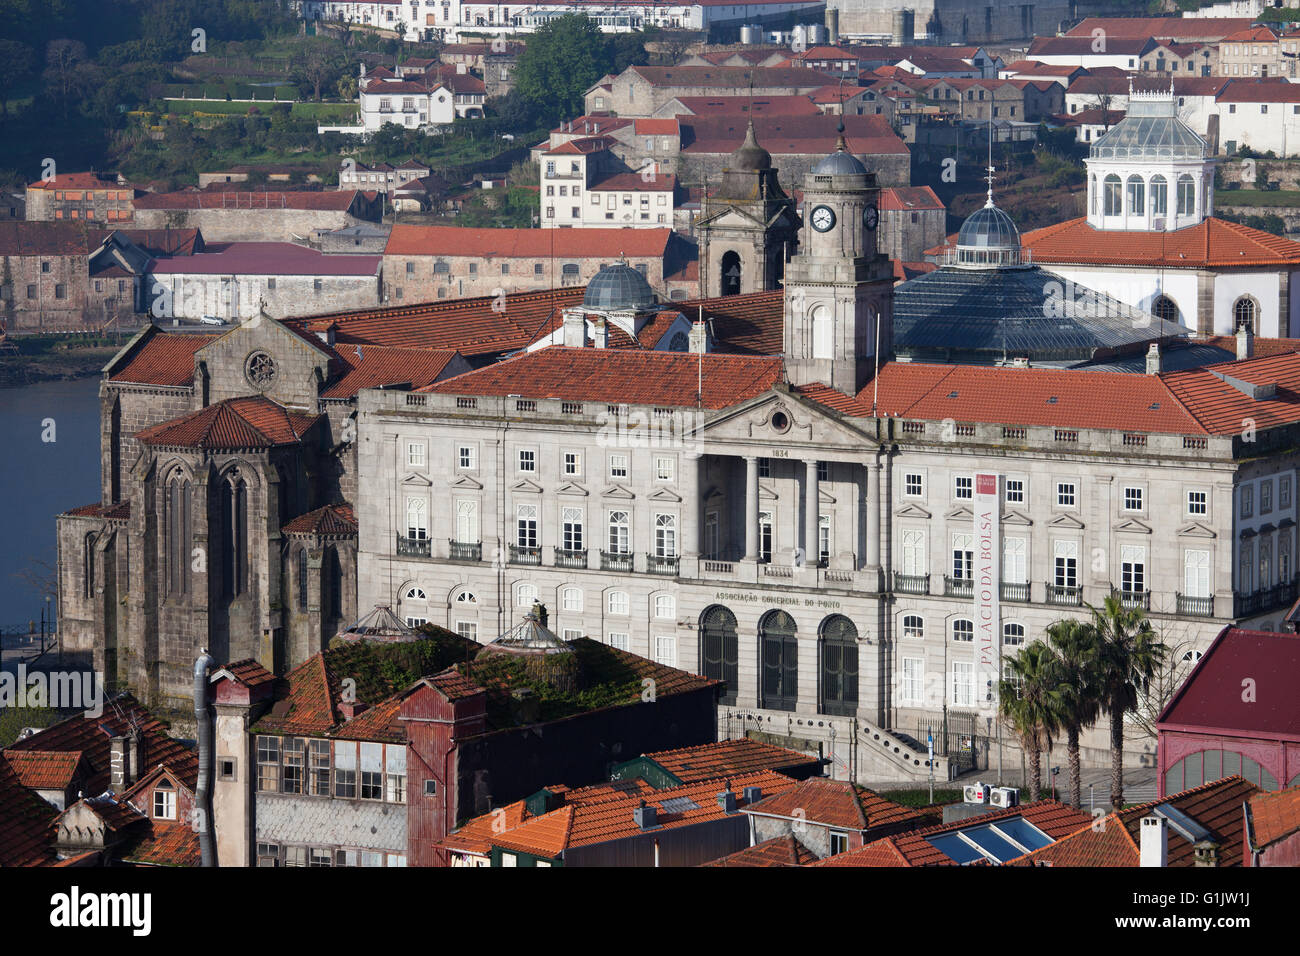 Portugal, Porto, le Palácio da Bolsa - Palais de la Bourse et Igreja de São Francisco (Eglise de Saint François) Banque D'Images